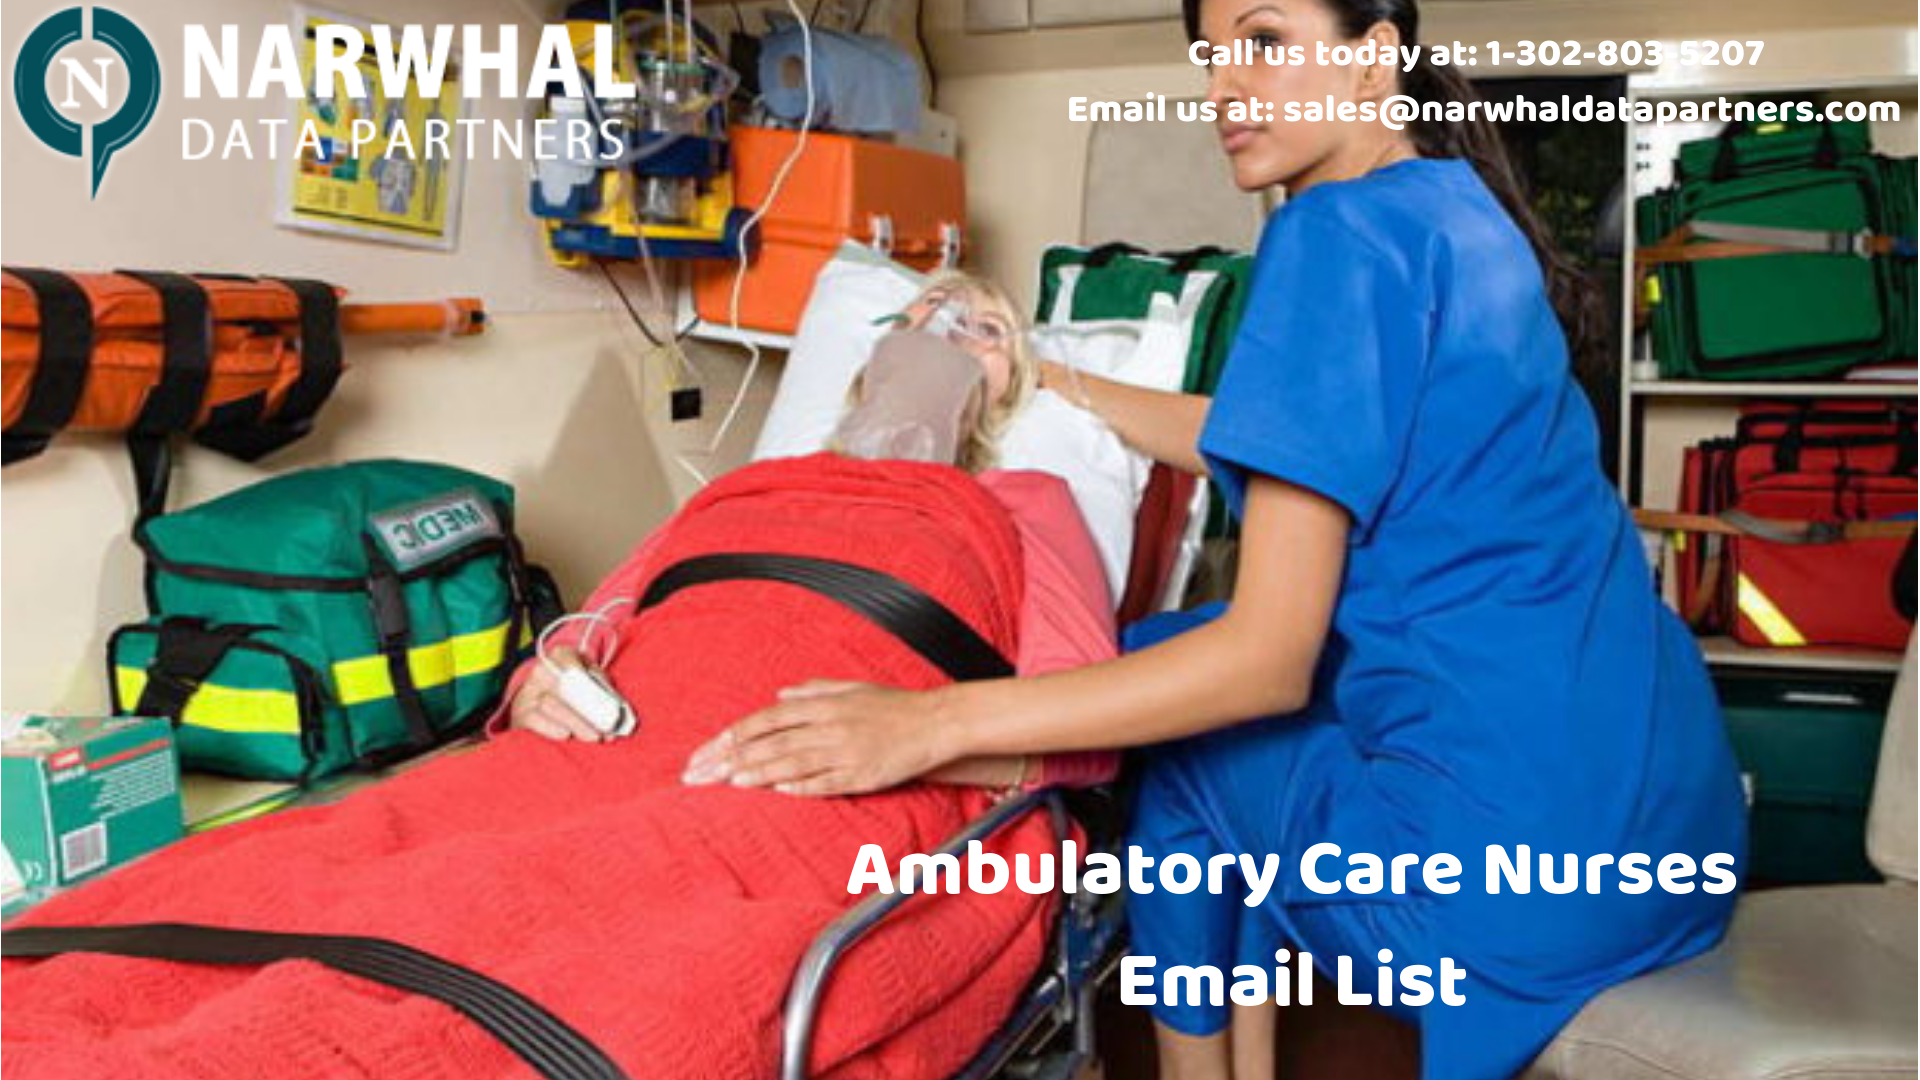 http://narwhaldatapartners.com/ambulatory-care-nurses-email-list.html